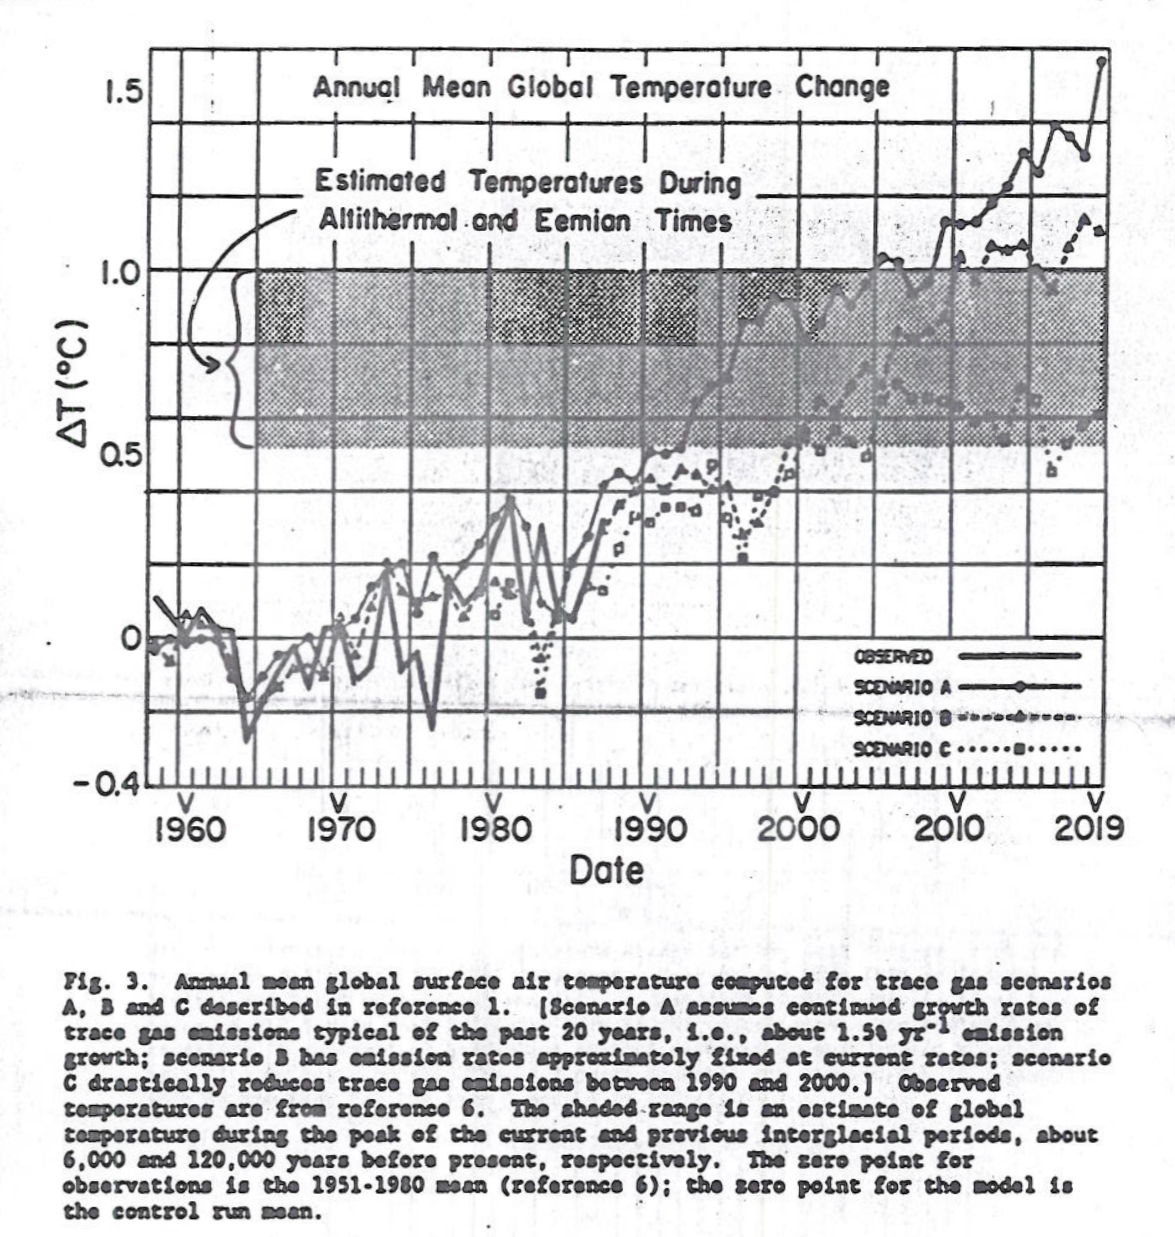 Figure 3, Annual Mean Global Temperature Change